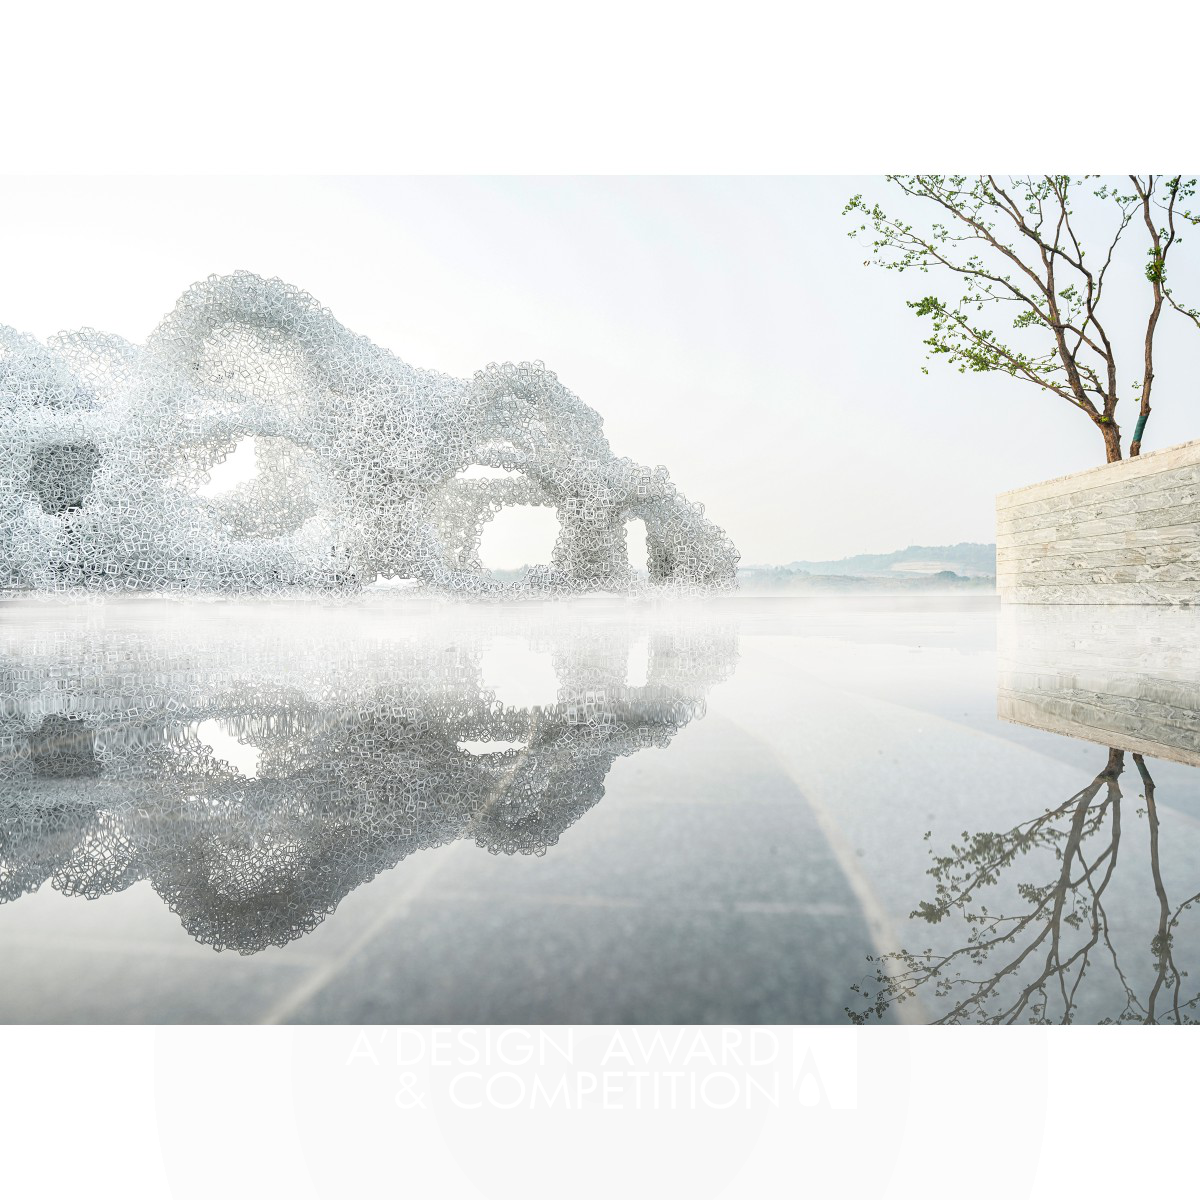 Облачное искусство в архитектуре: проект "River Cloud" от Shang Cai